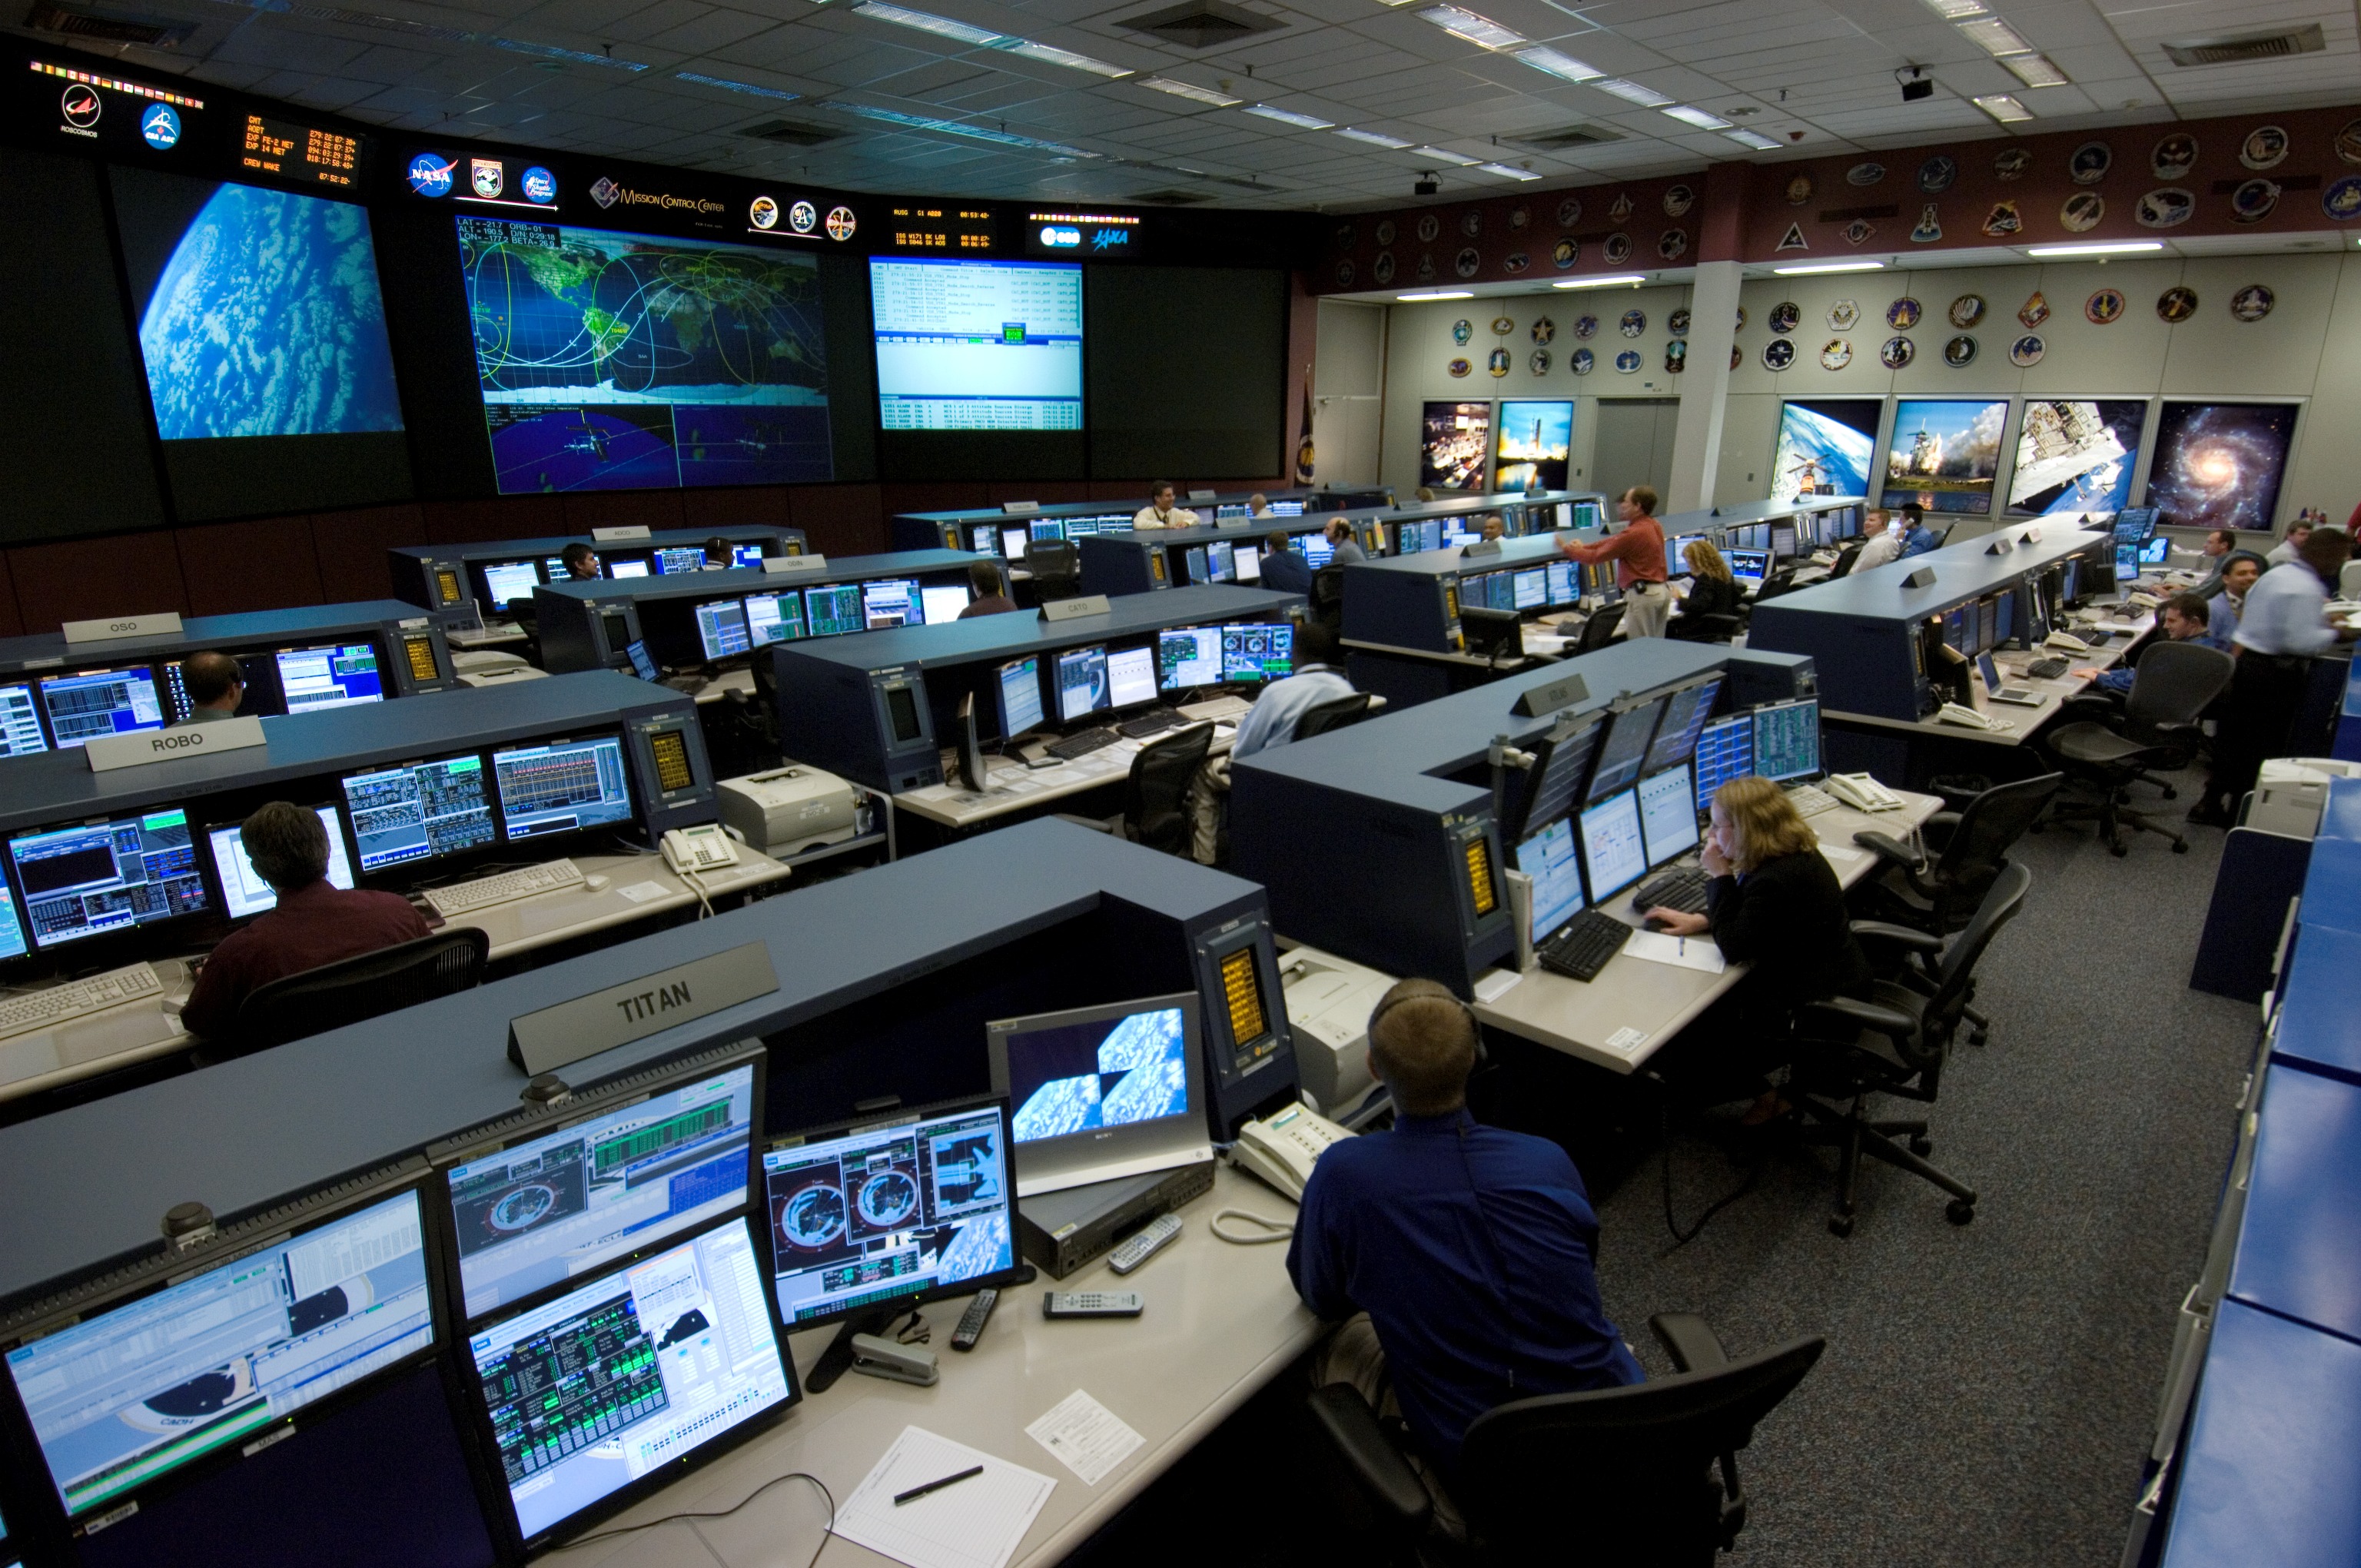 ISS Flight Control Room 2006